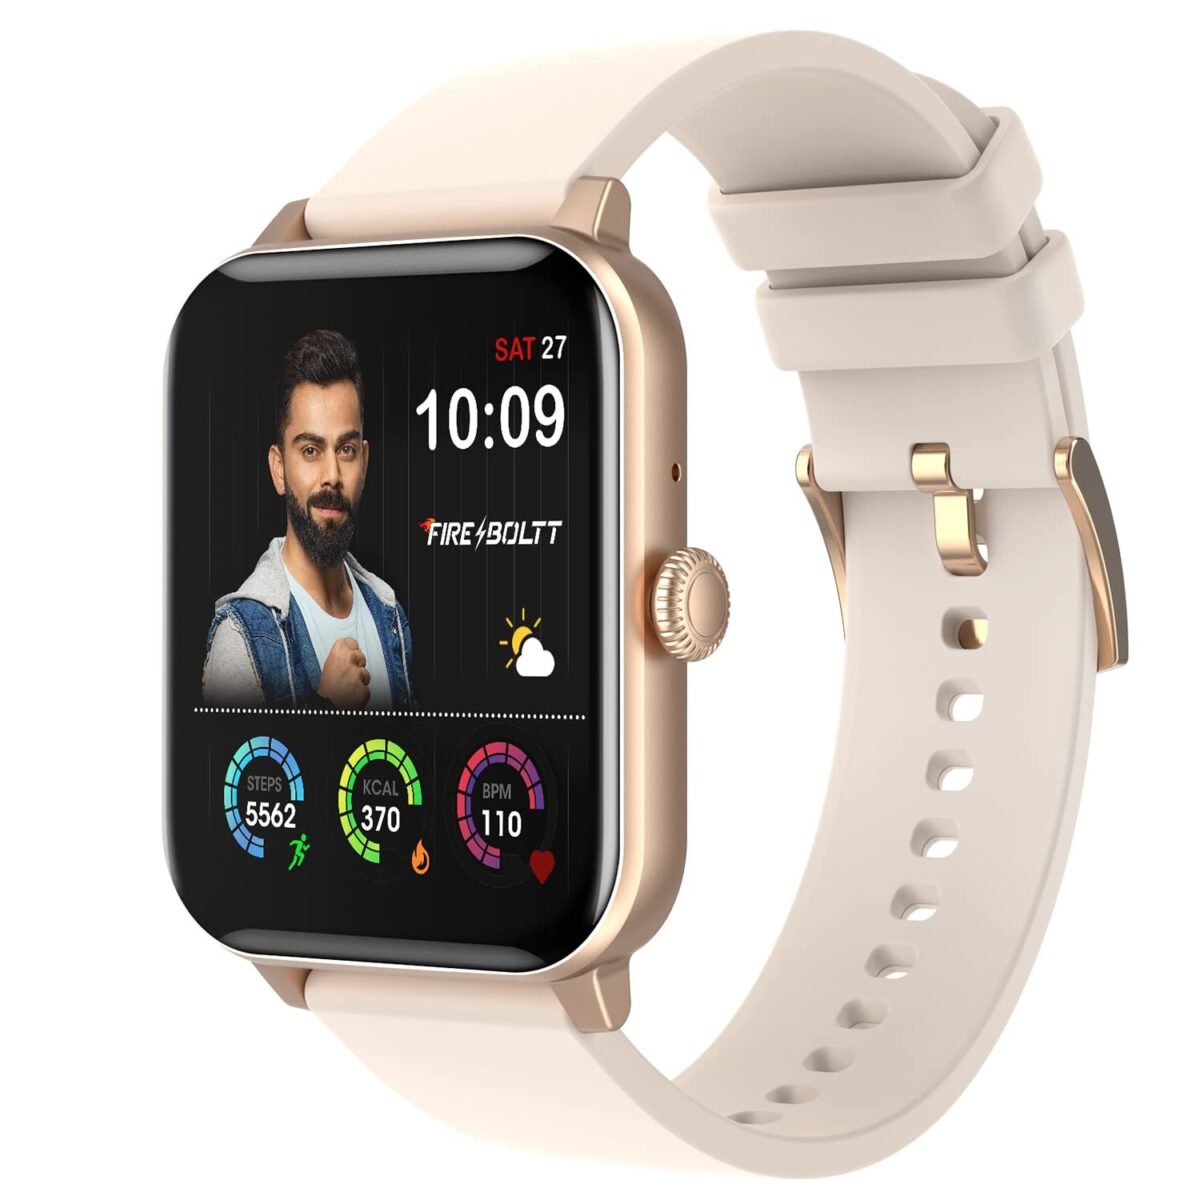 Fire Boltt Ninja Calling Smartwatch 1 Shop Mobile Accessories Online in India